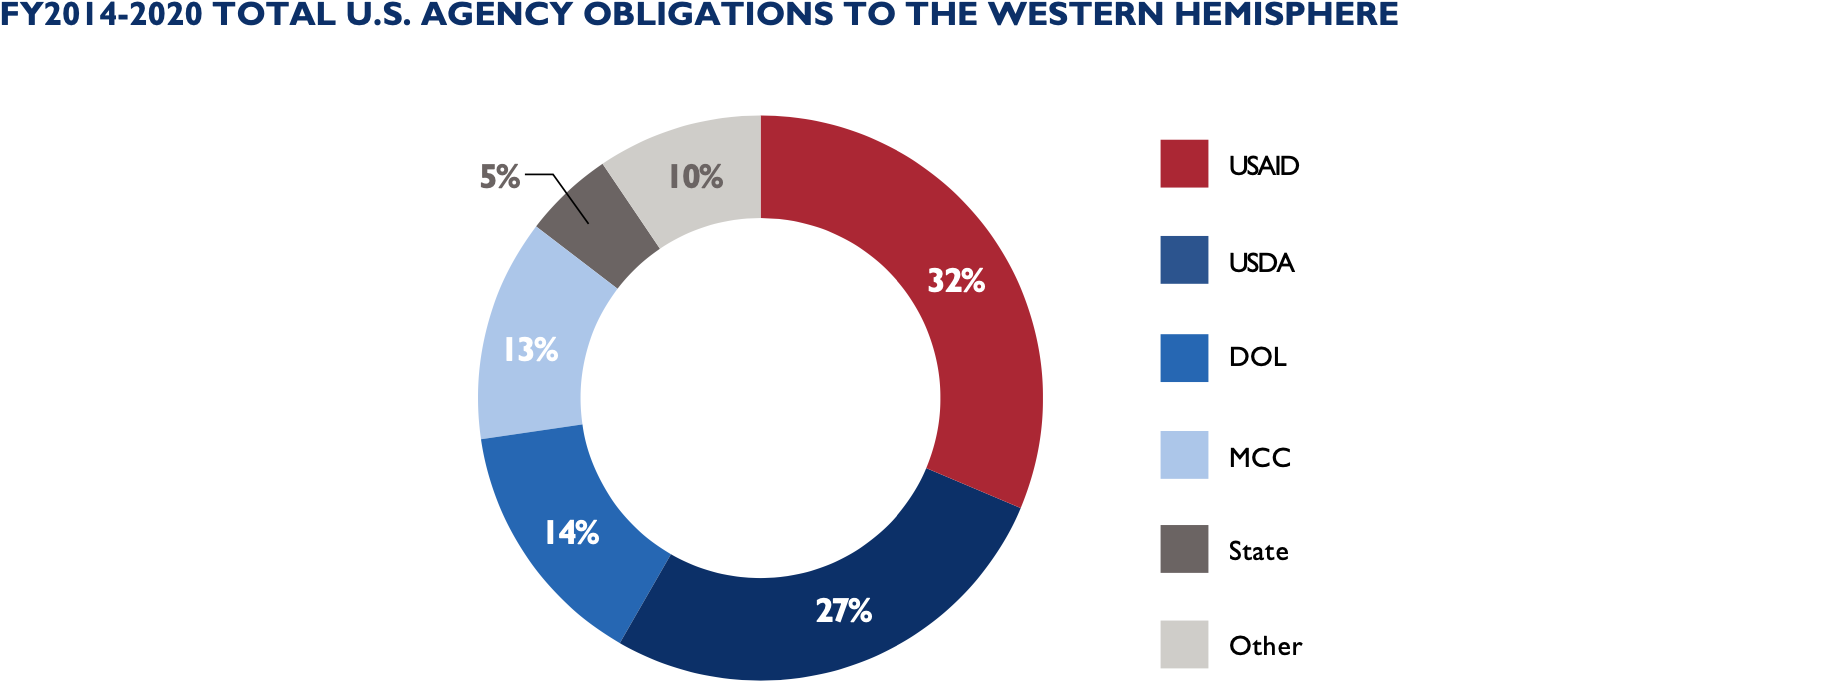 Pie chart of total U.S. agency obligations to the Western Hemisphere FY2014-2020